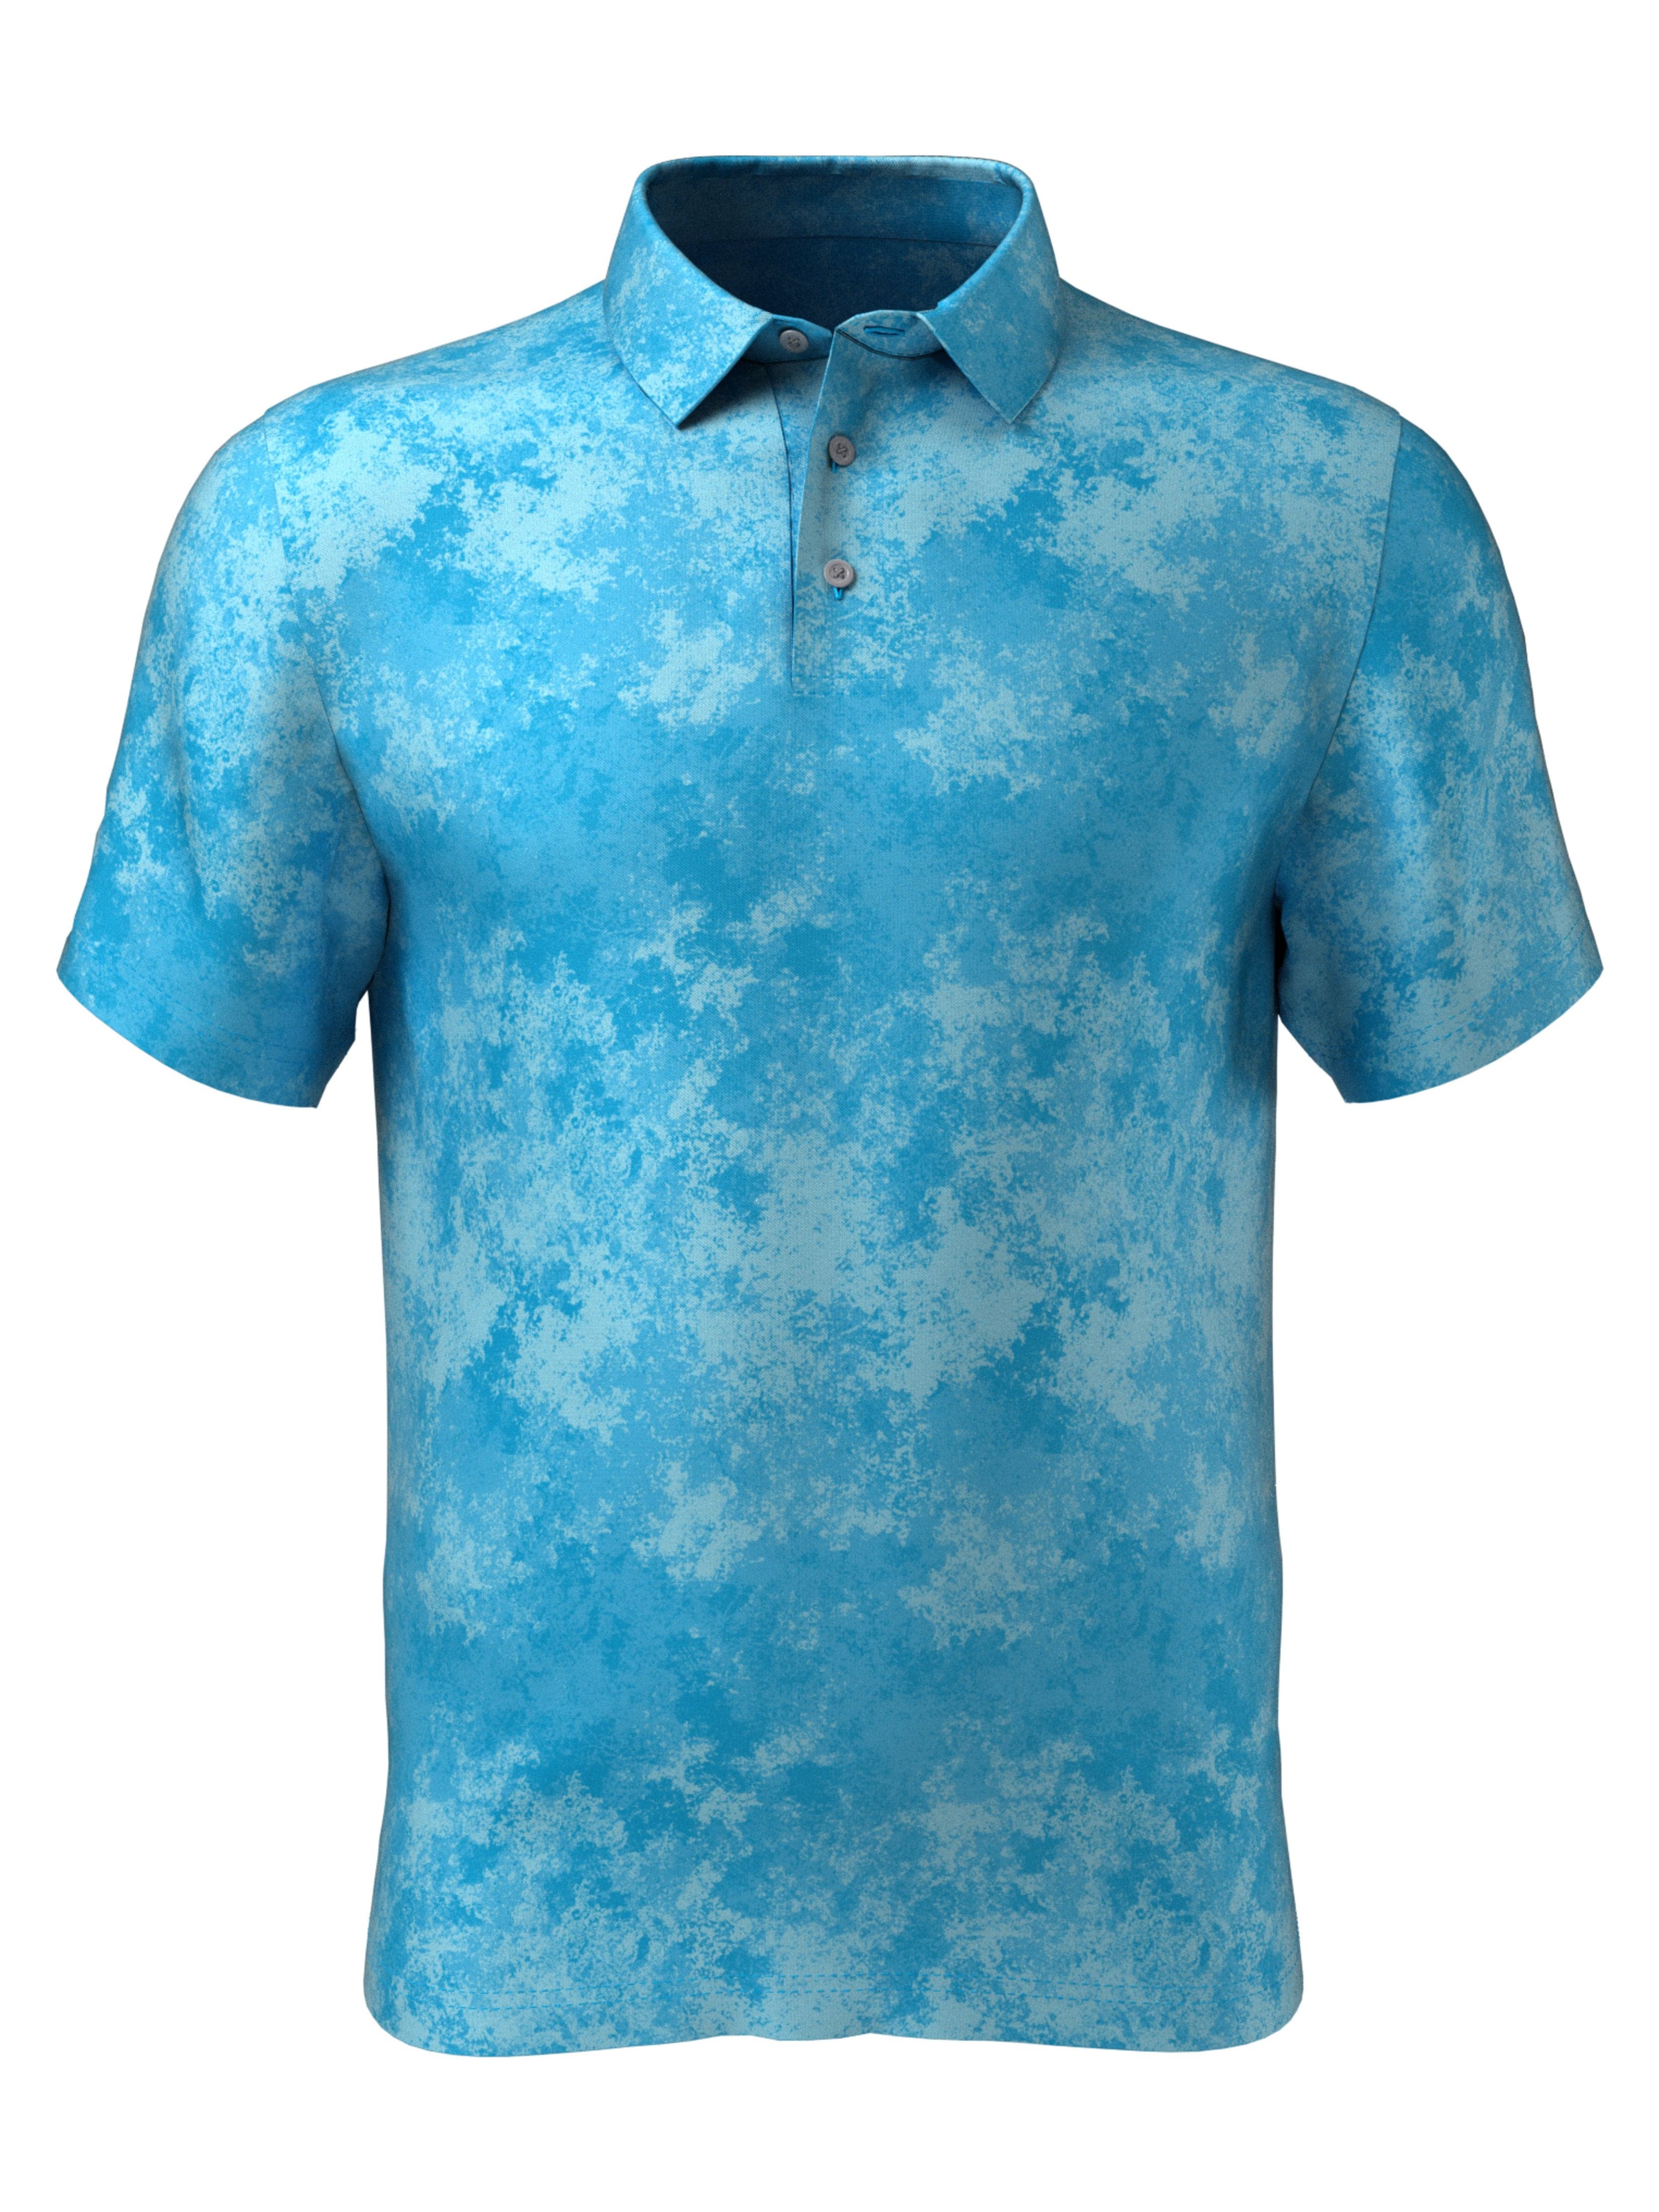 PGA TOUR Apparel Boys Natures Marble Print Polo Shirt, Size Large, Blue Danub/Blue Topaz, 100% Polyester | Golf Apparel Shop